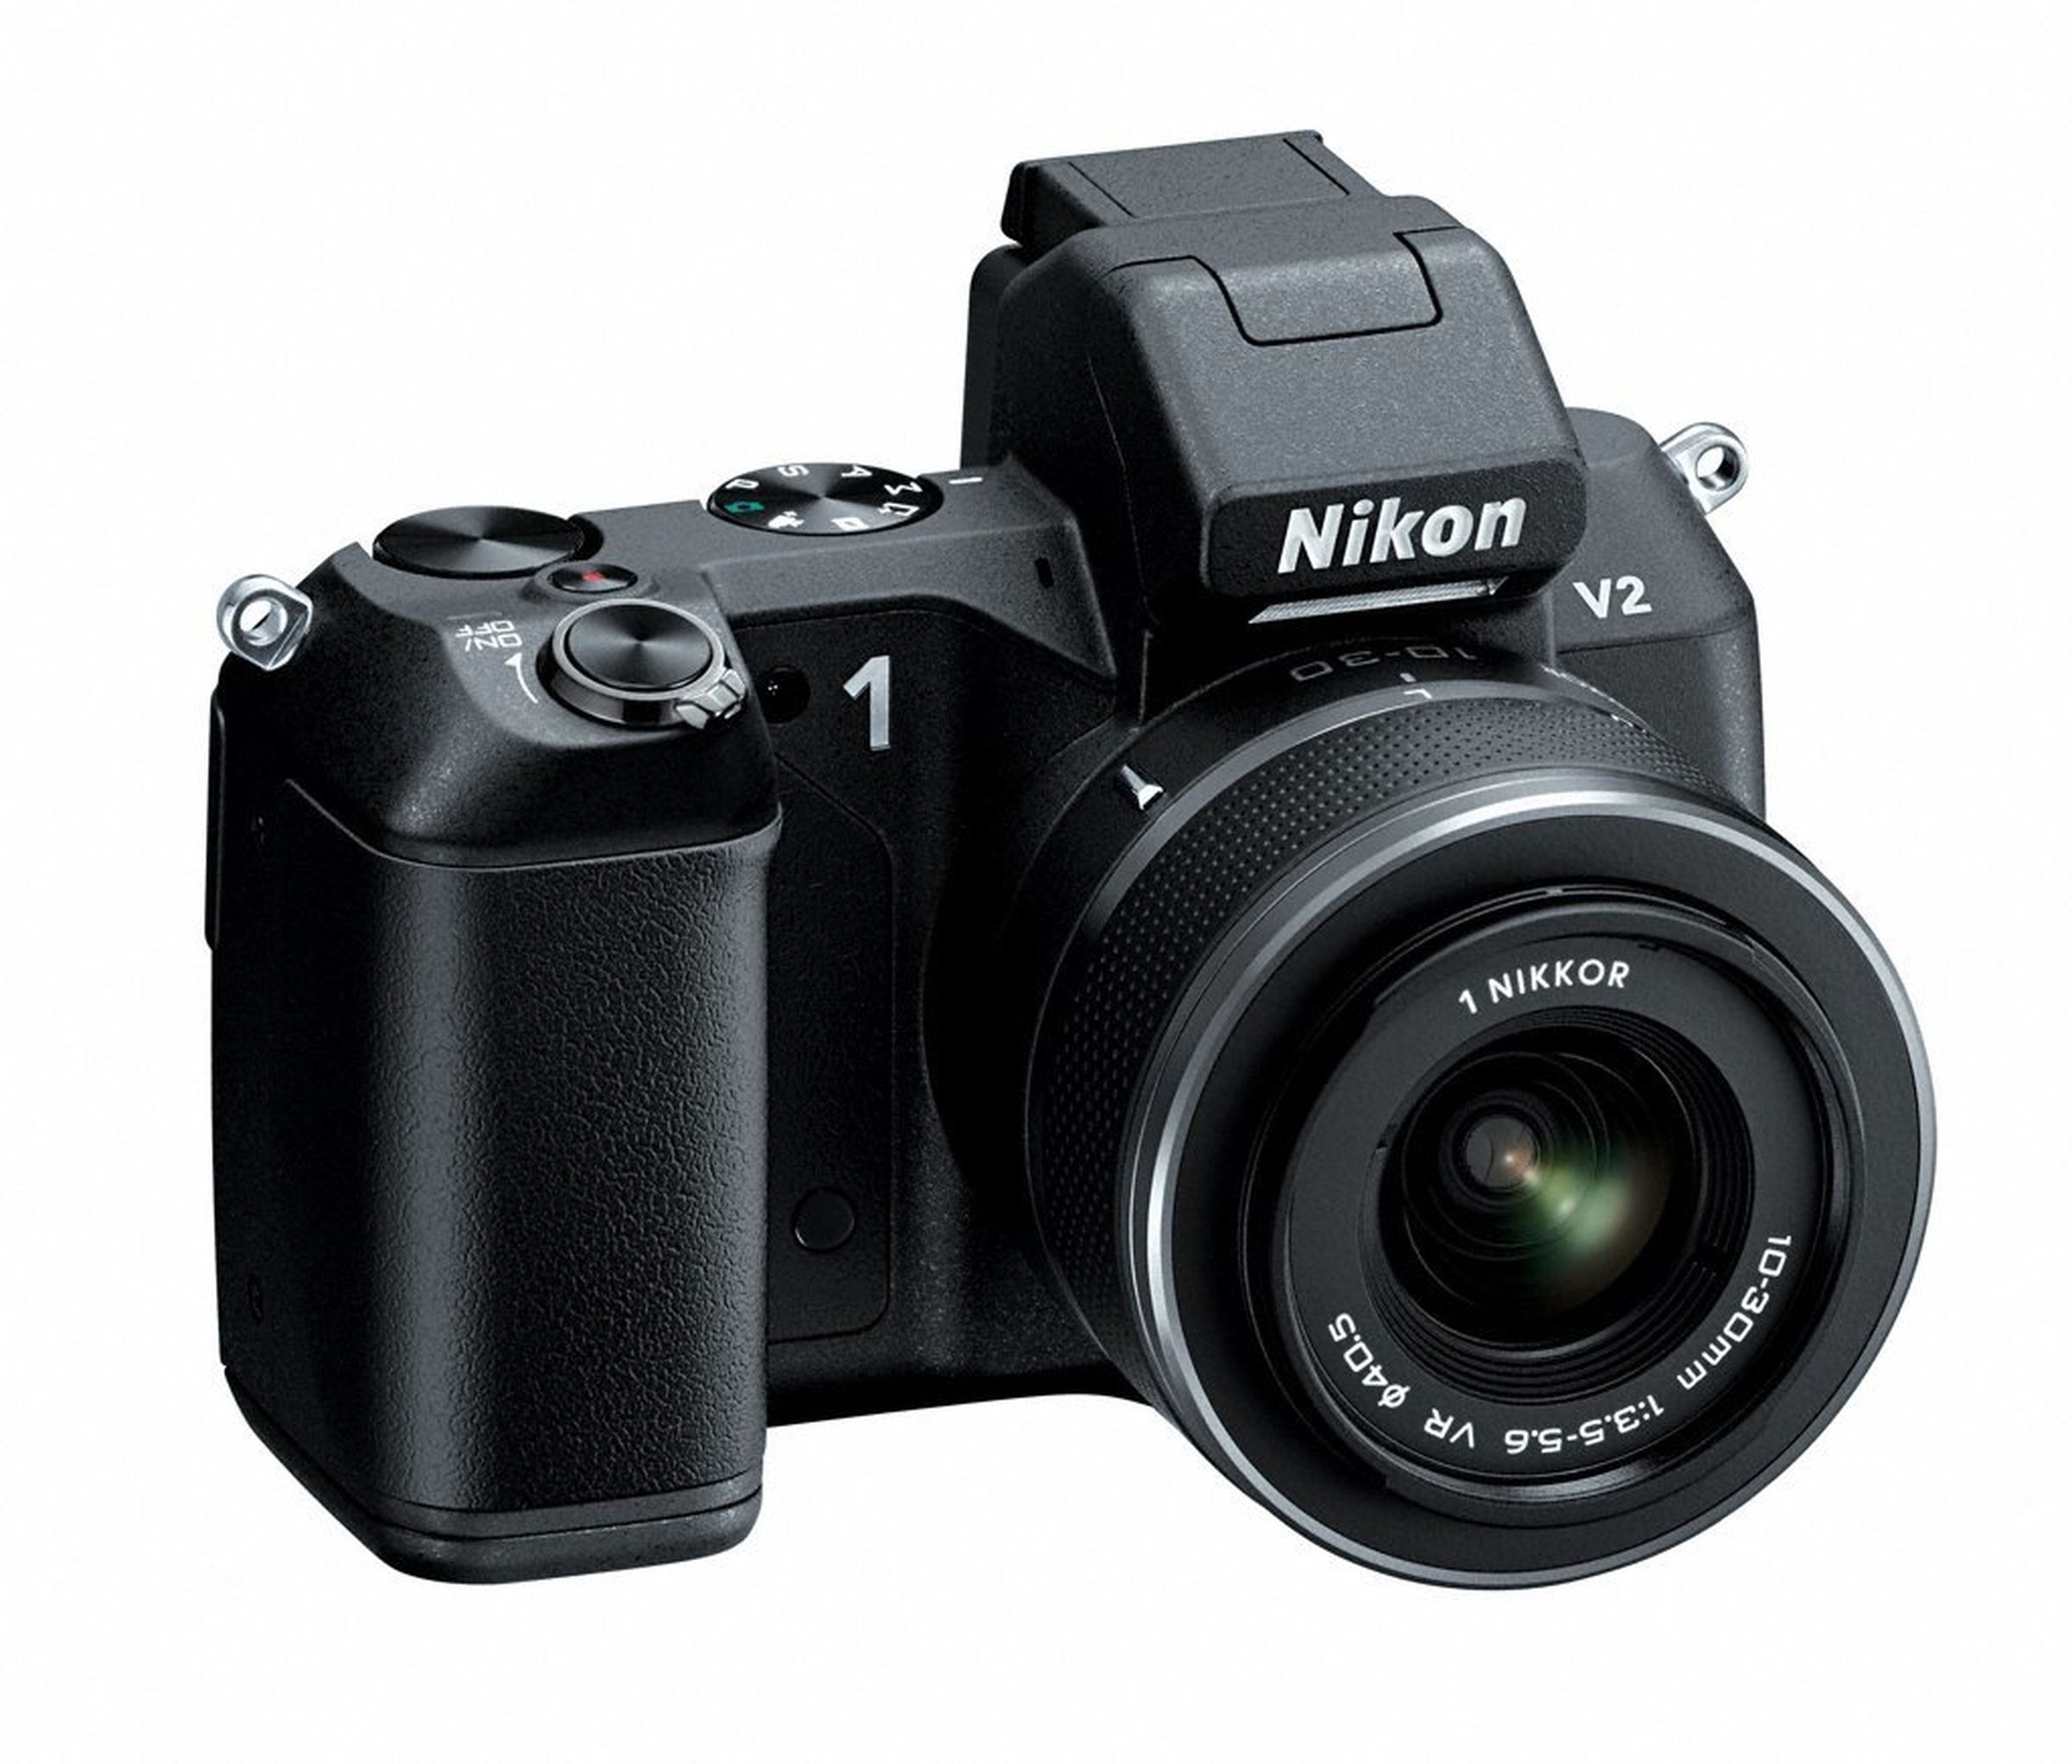 Nikon 1 V2 pictures